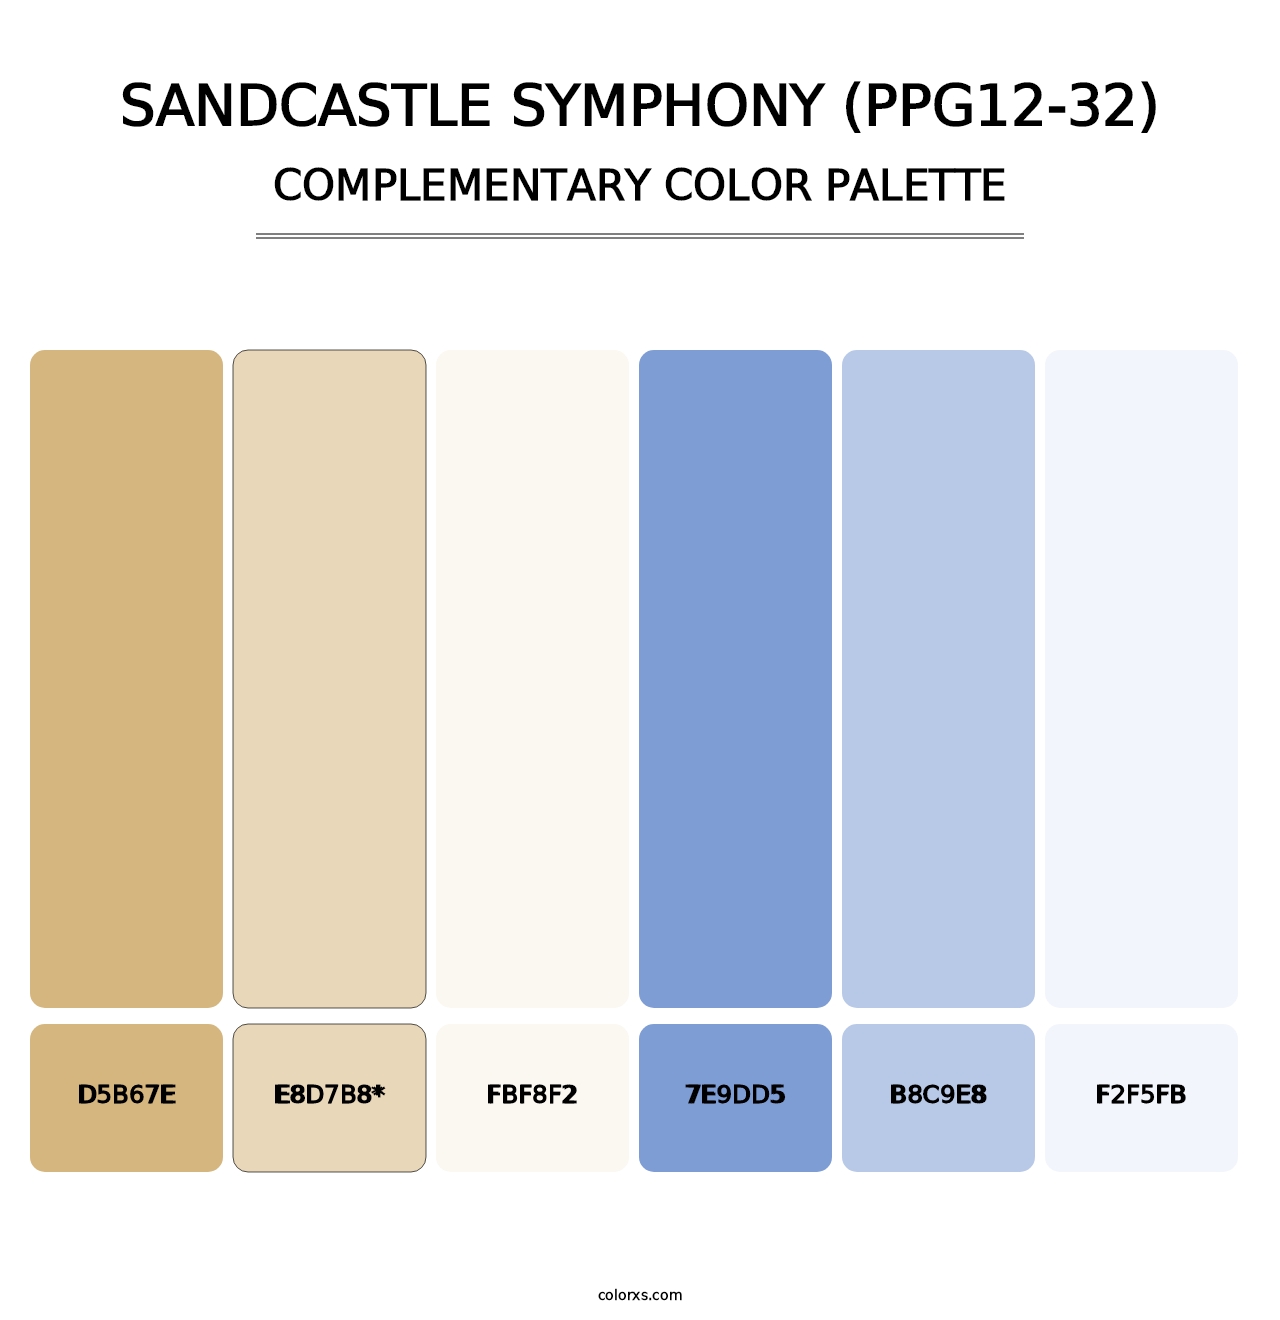 Sandcastle Symphony (PPG12-32) - Complementary Color Palette